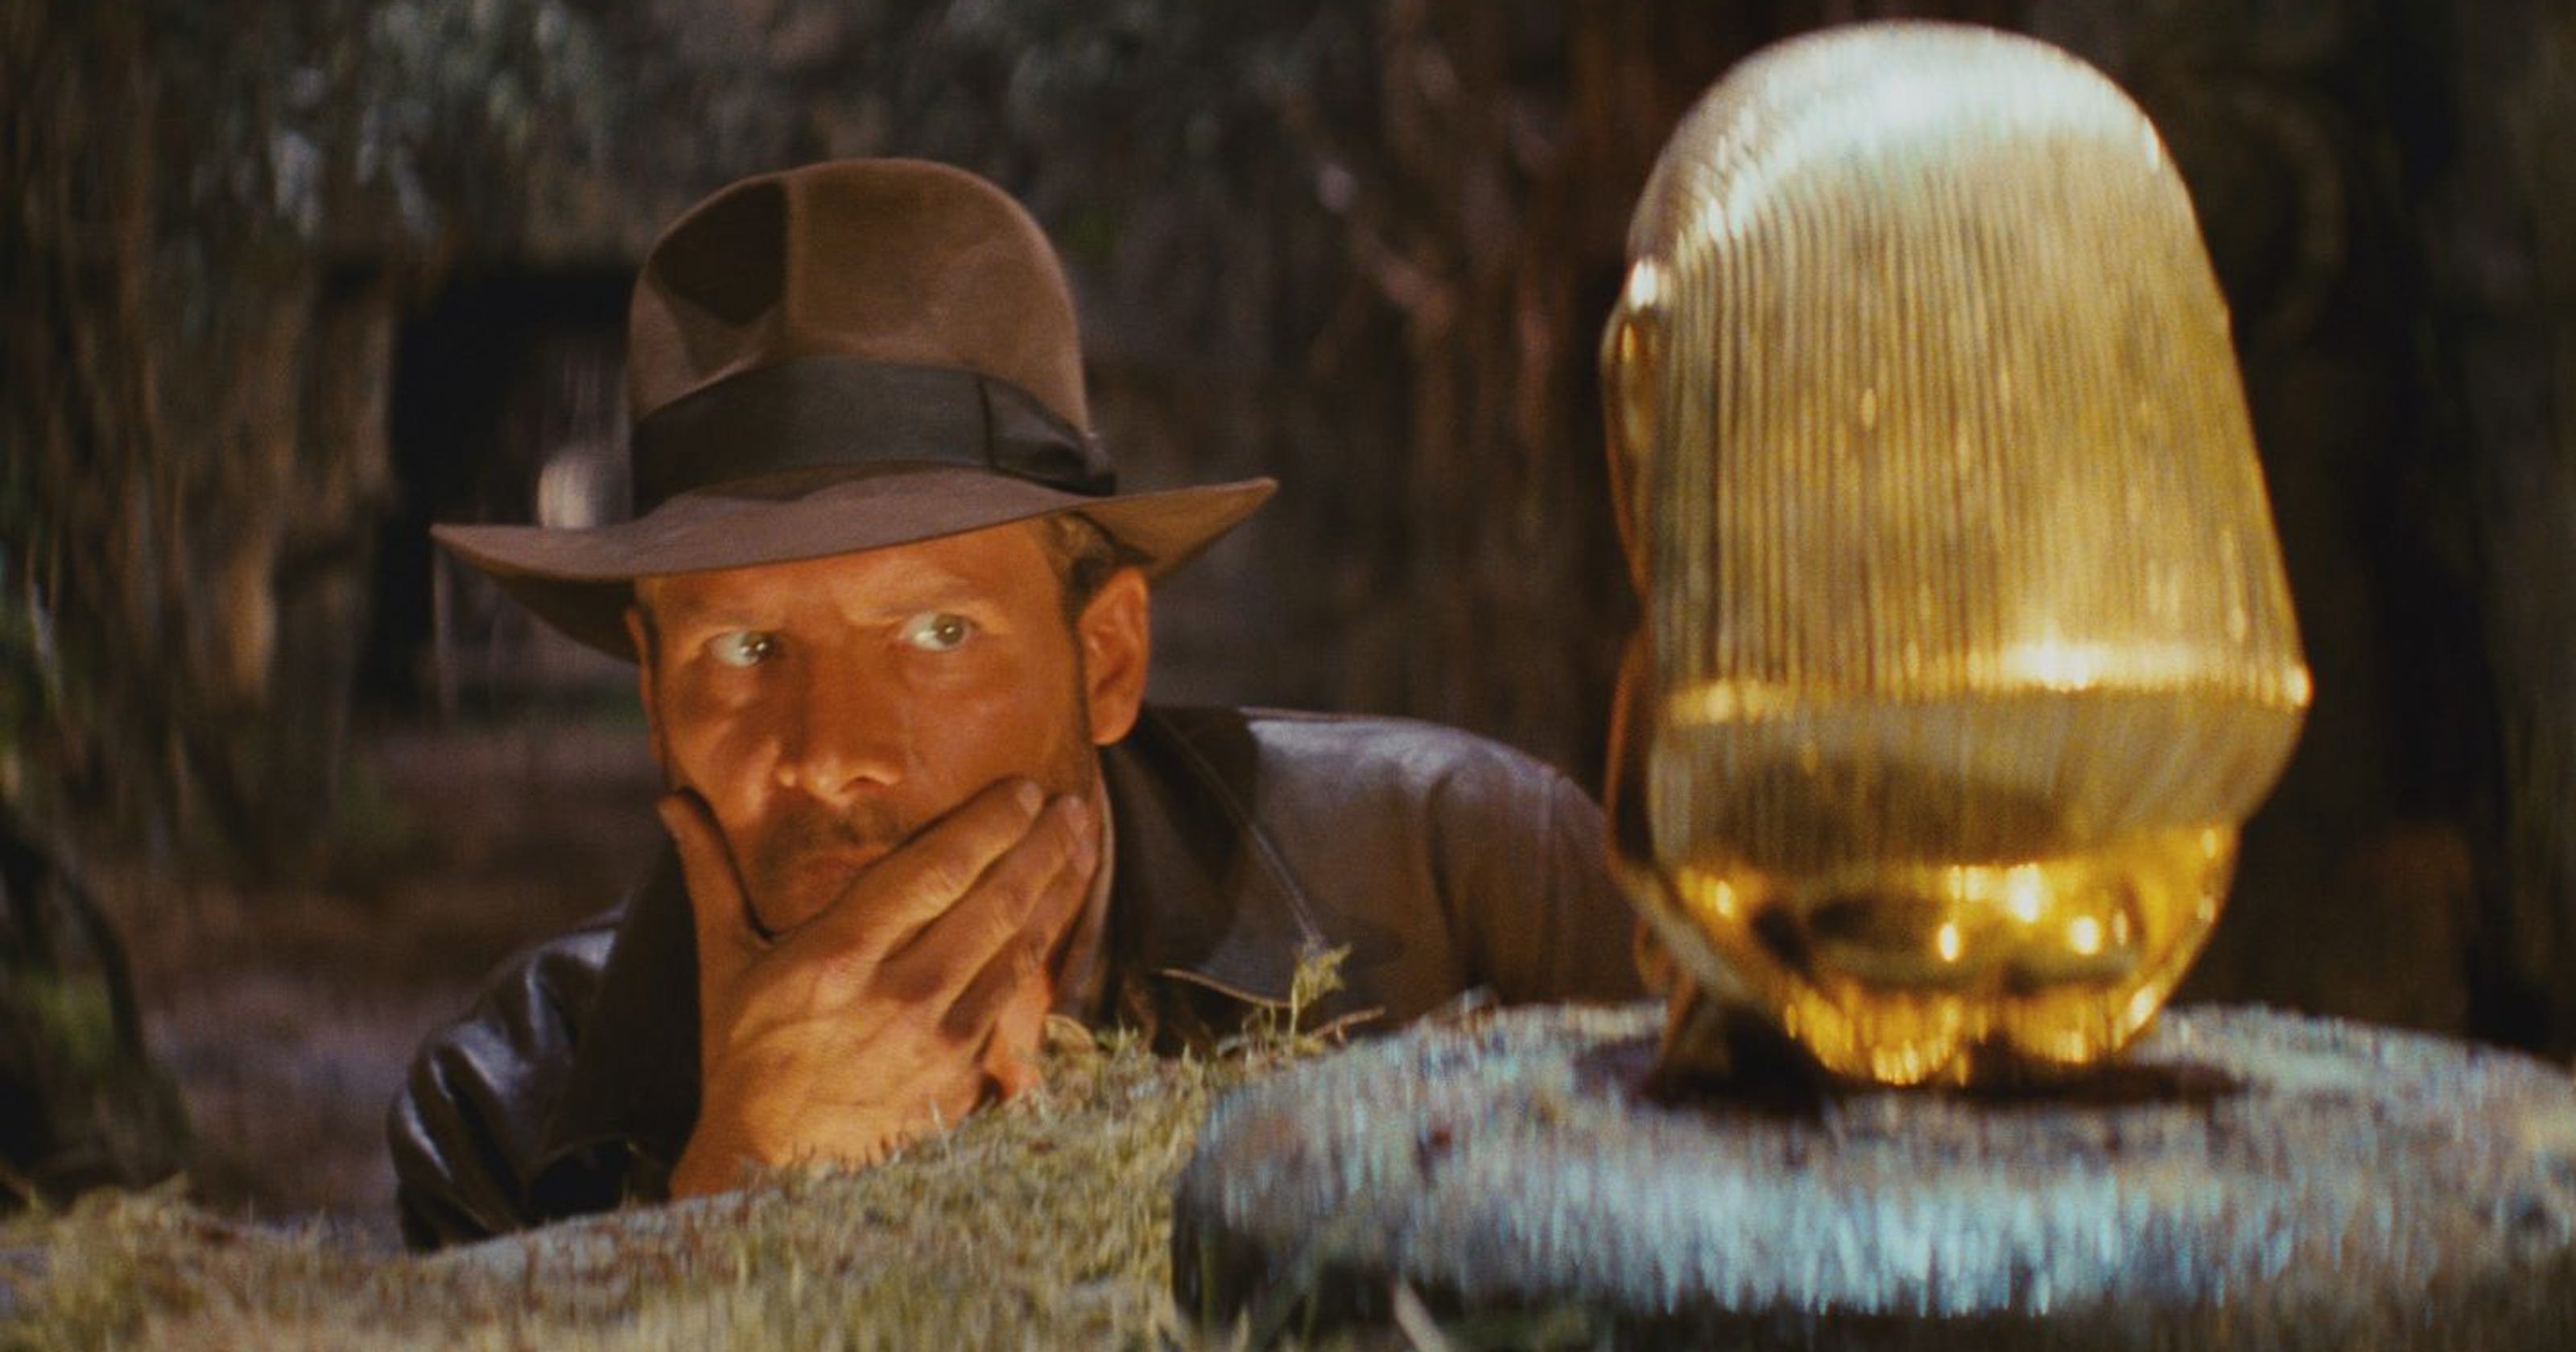 The Fifth Installment of Indiana Jones Will Begin Filming in 2020